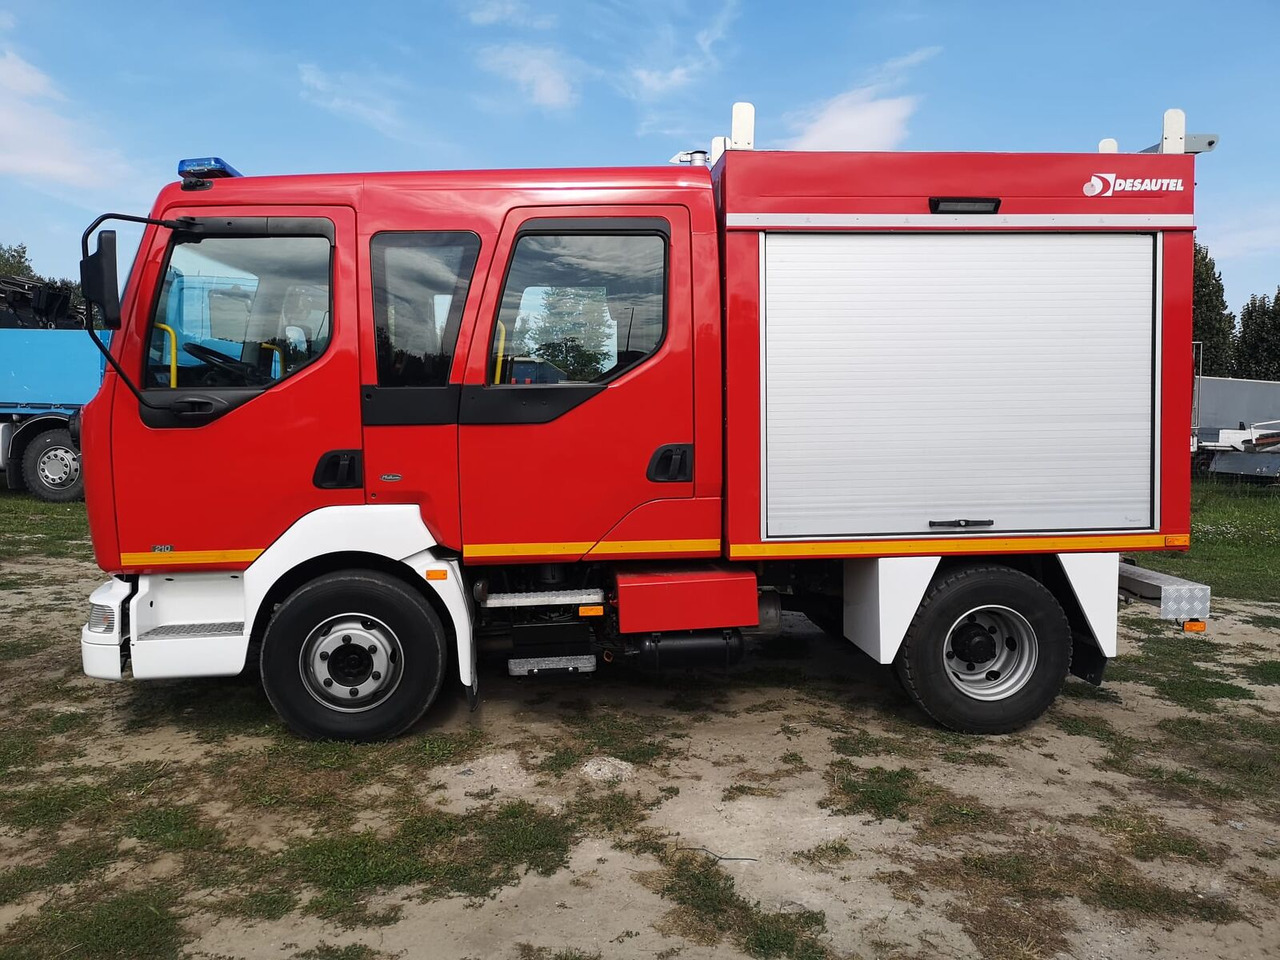 Fire truck Renault Midlum 210 dci Fire Truck - 2000l water + 170l foam: picture 4